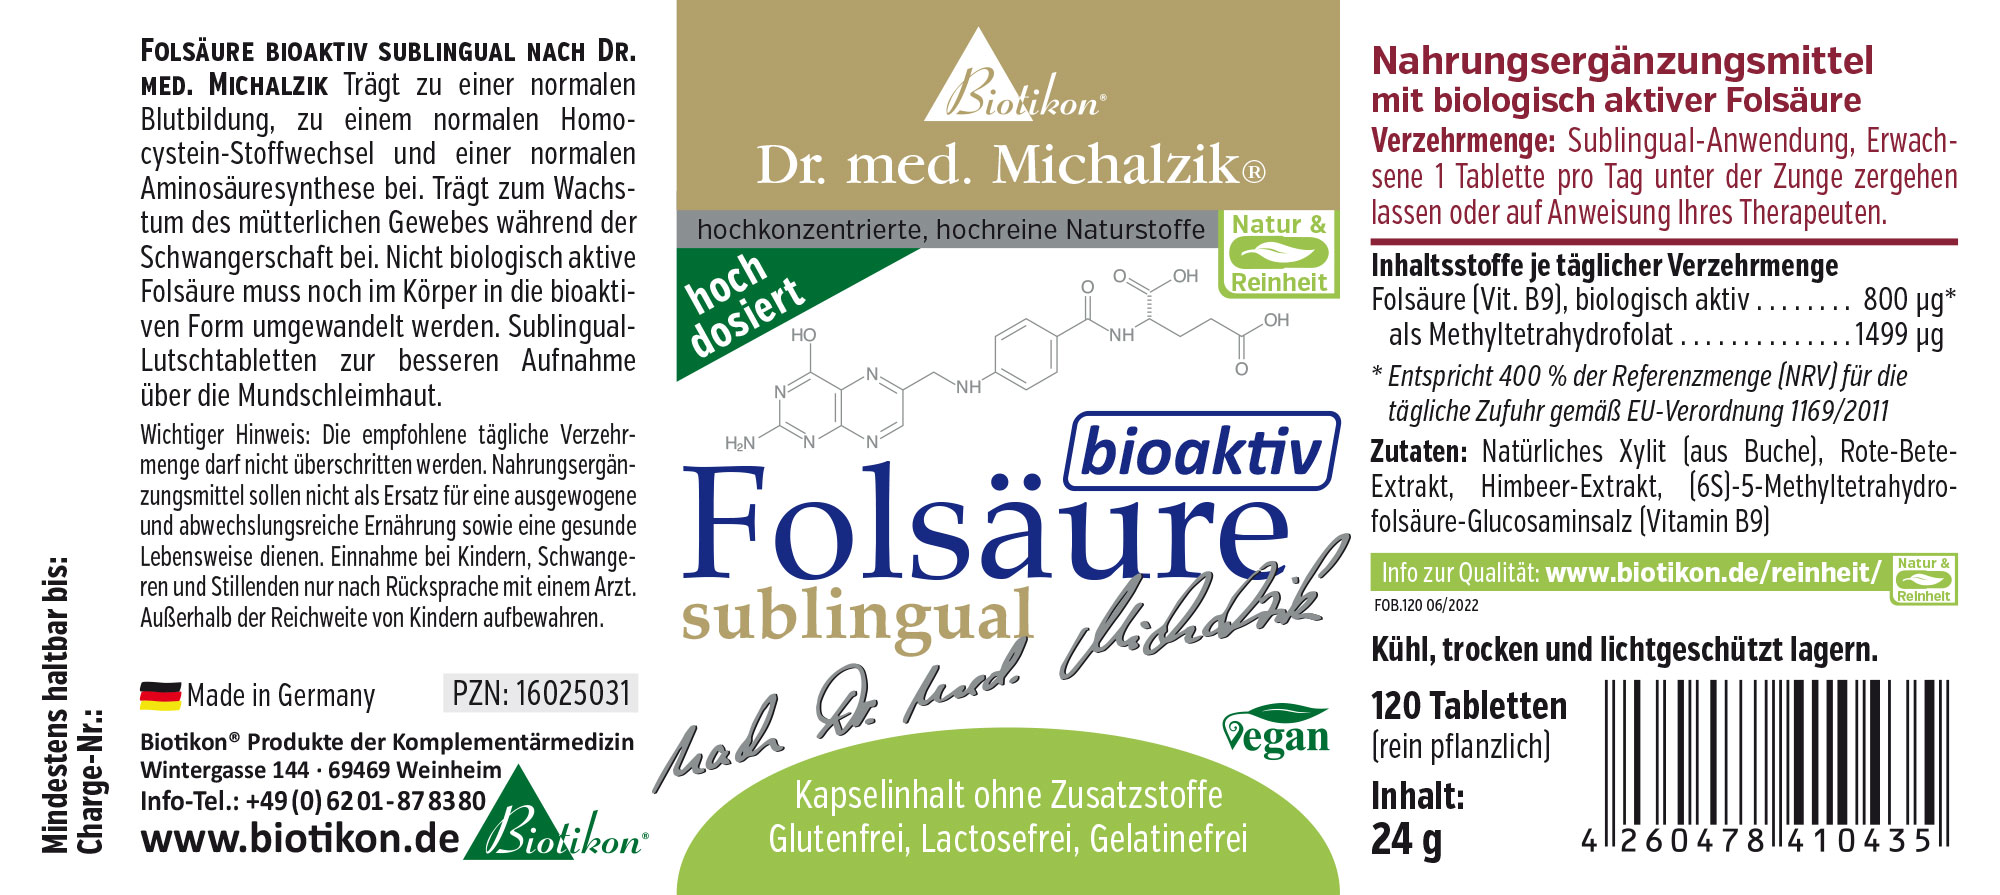 Folsäure bioaktiv (Vitamin B9)